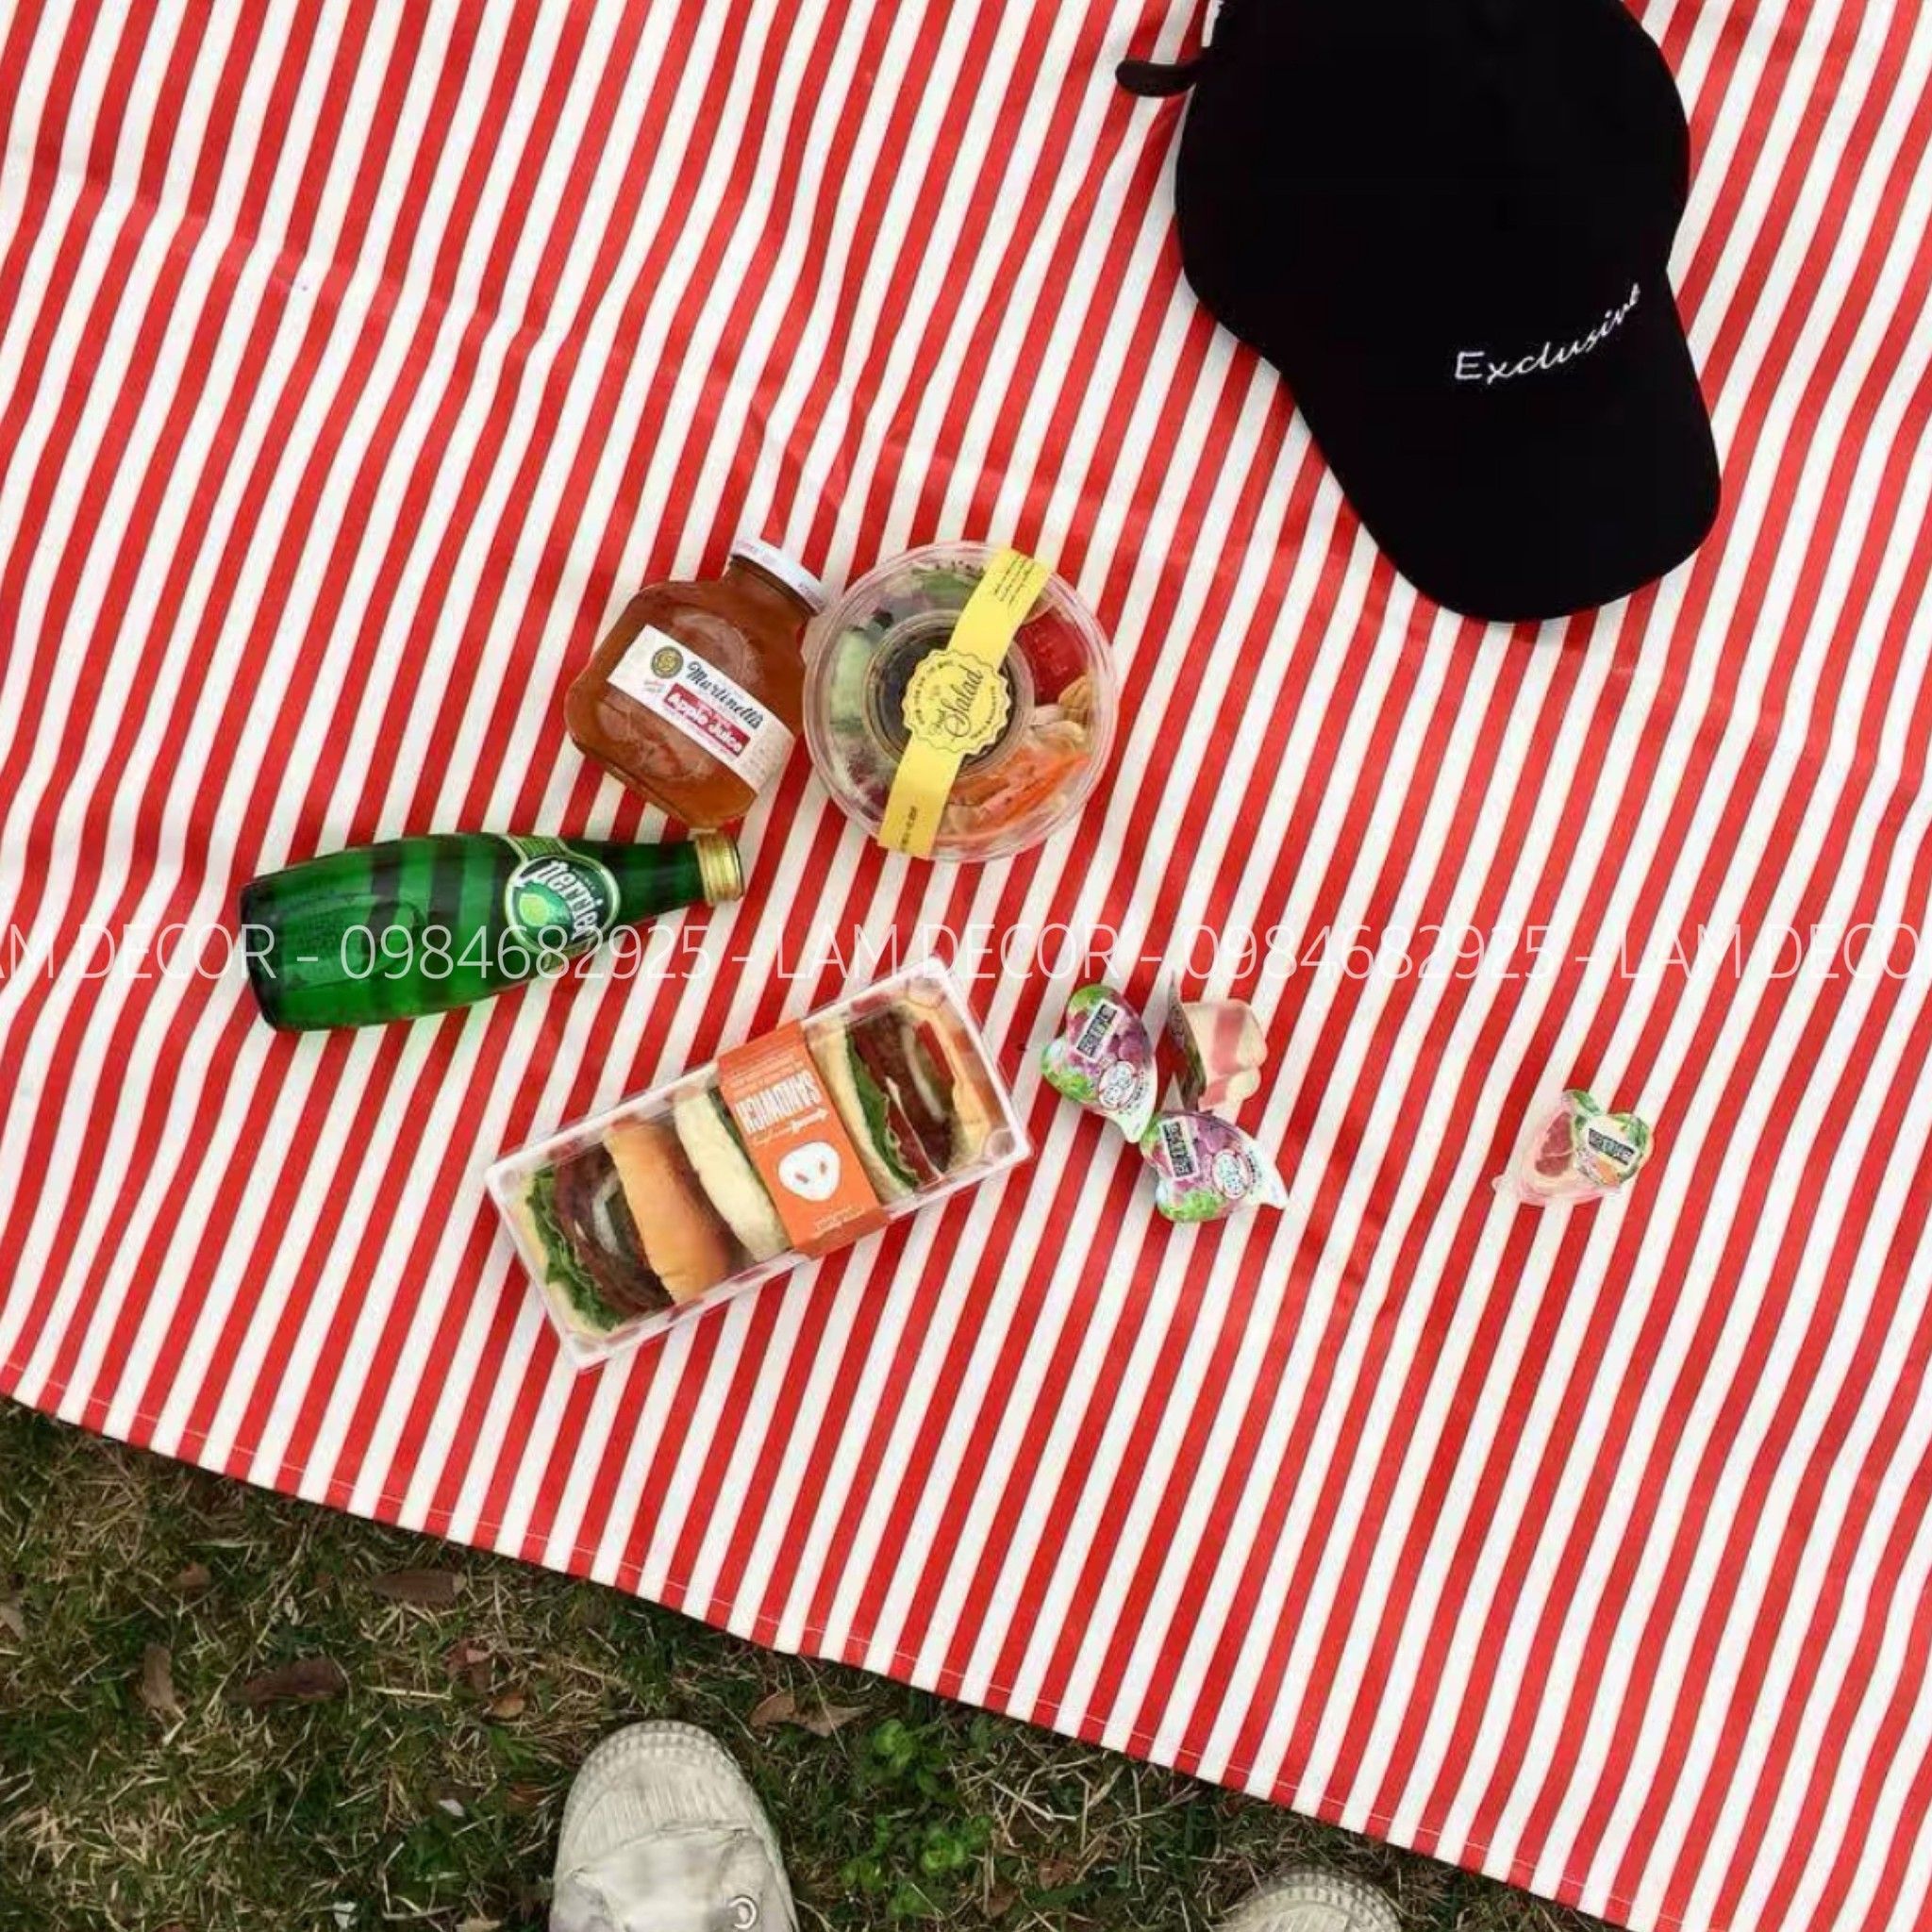  BST thảm trải picnic bằng vải canvas 